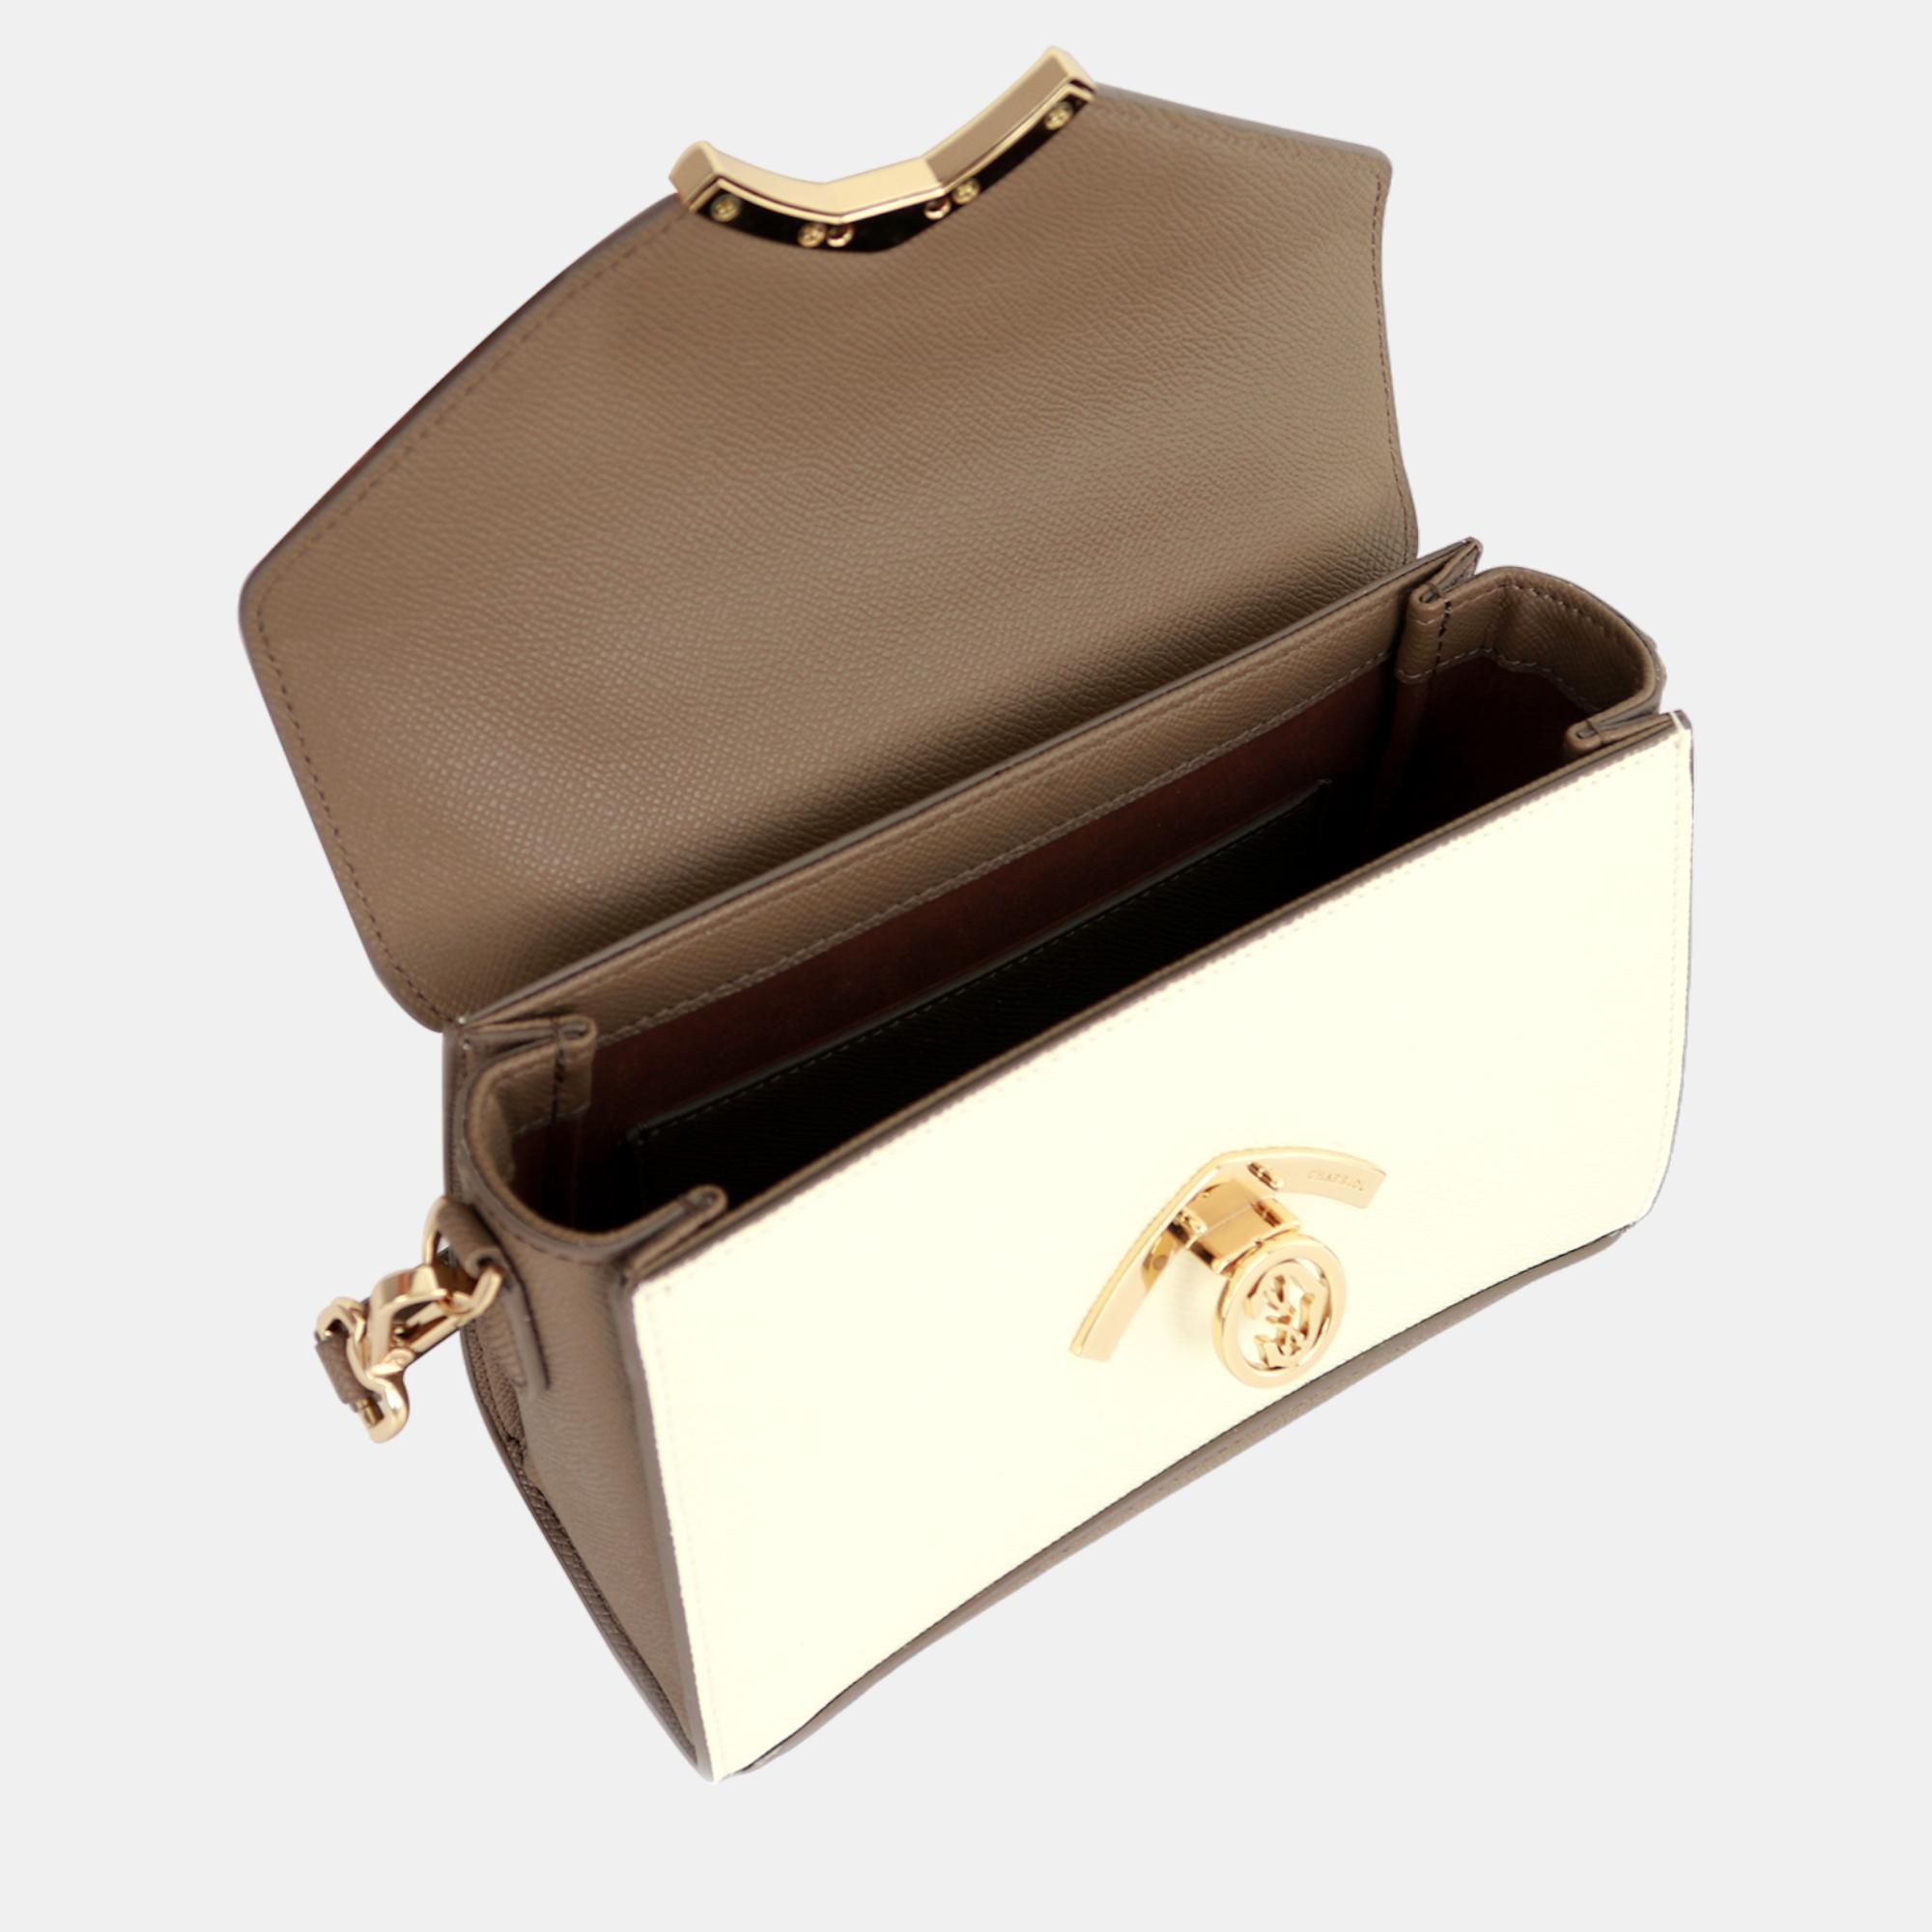 Charriol Taupe/Beige Leather Coralie Malia Handbag